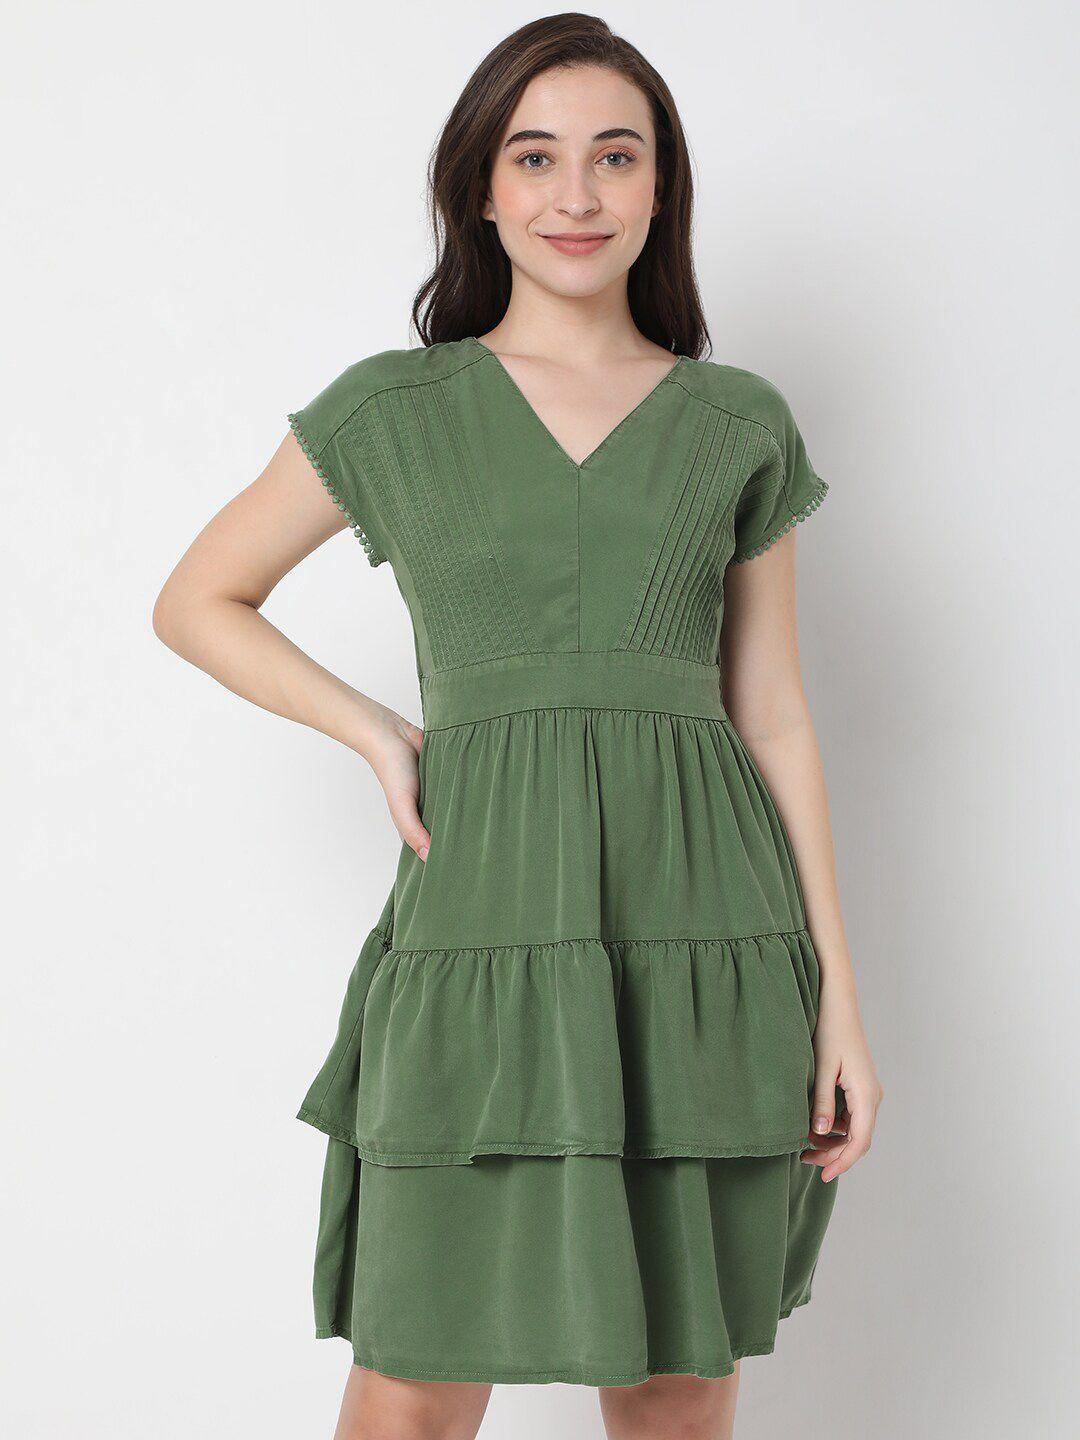 vero moda green fit & flare tiered smocked knee length dress